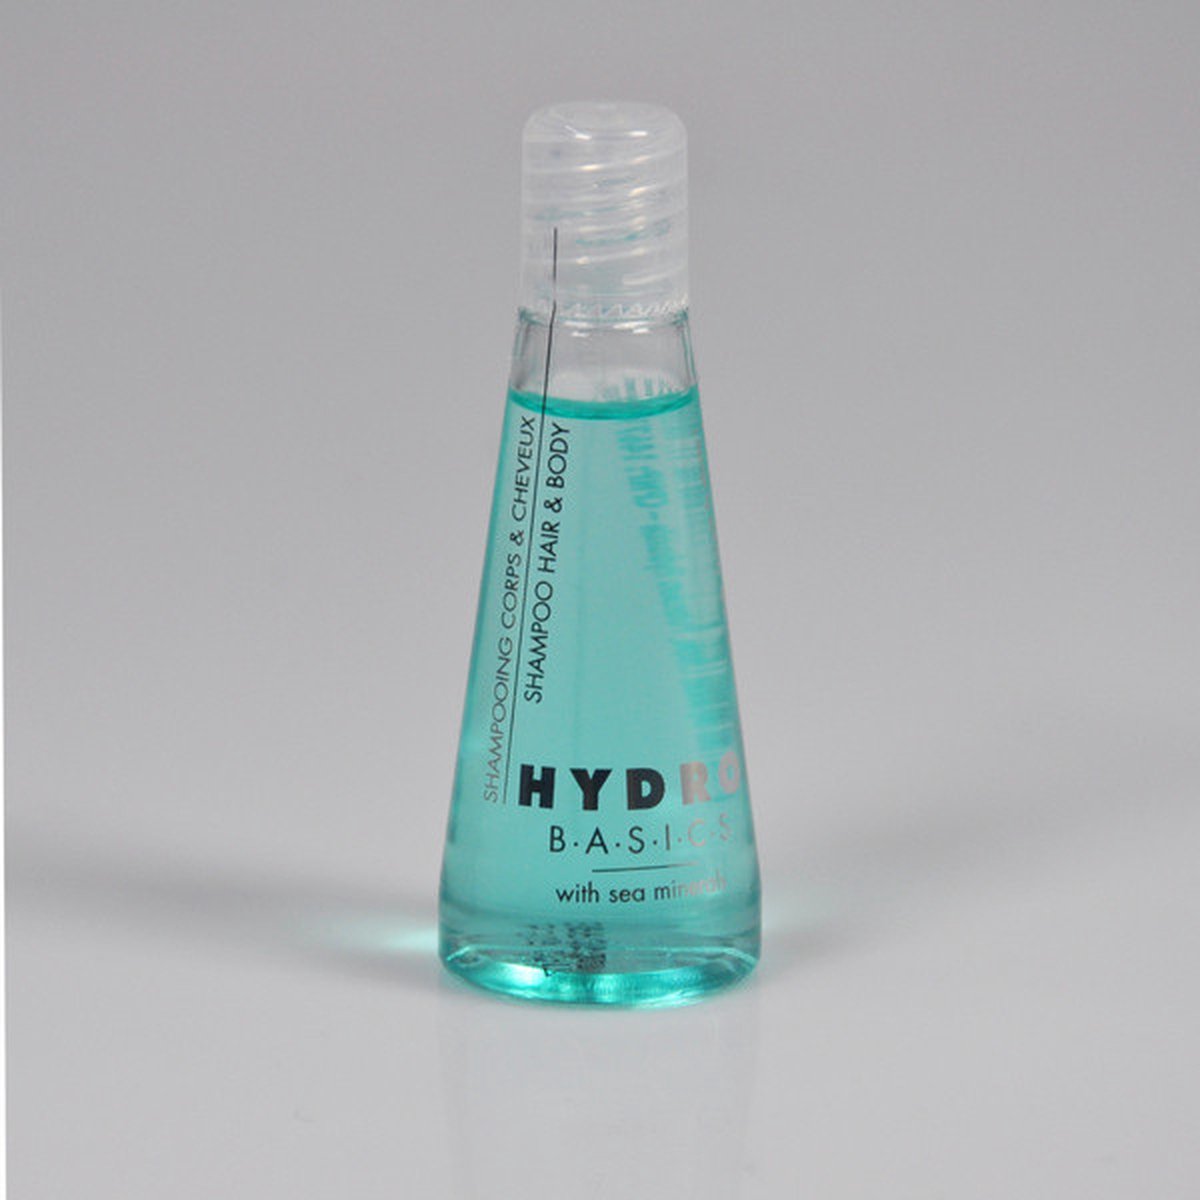 HYDRO Basics-shampoo 198 flacons a 30 ml